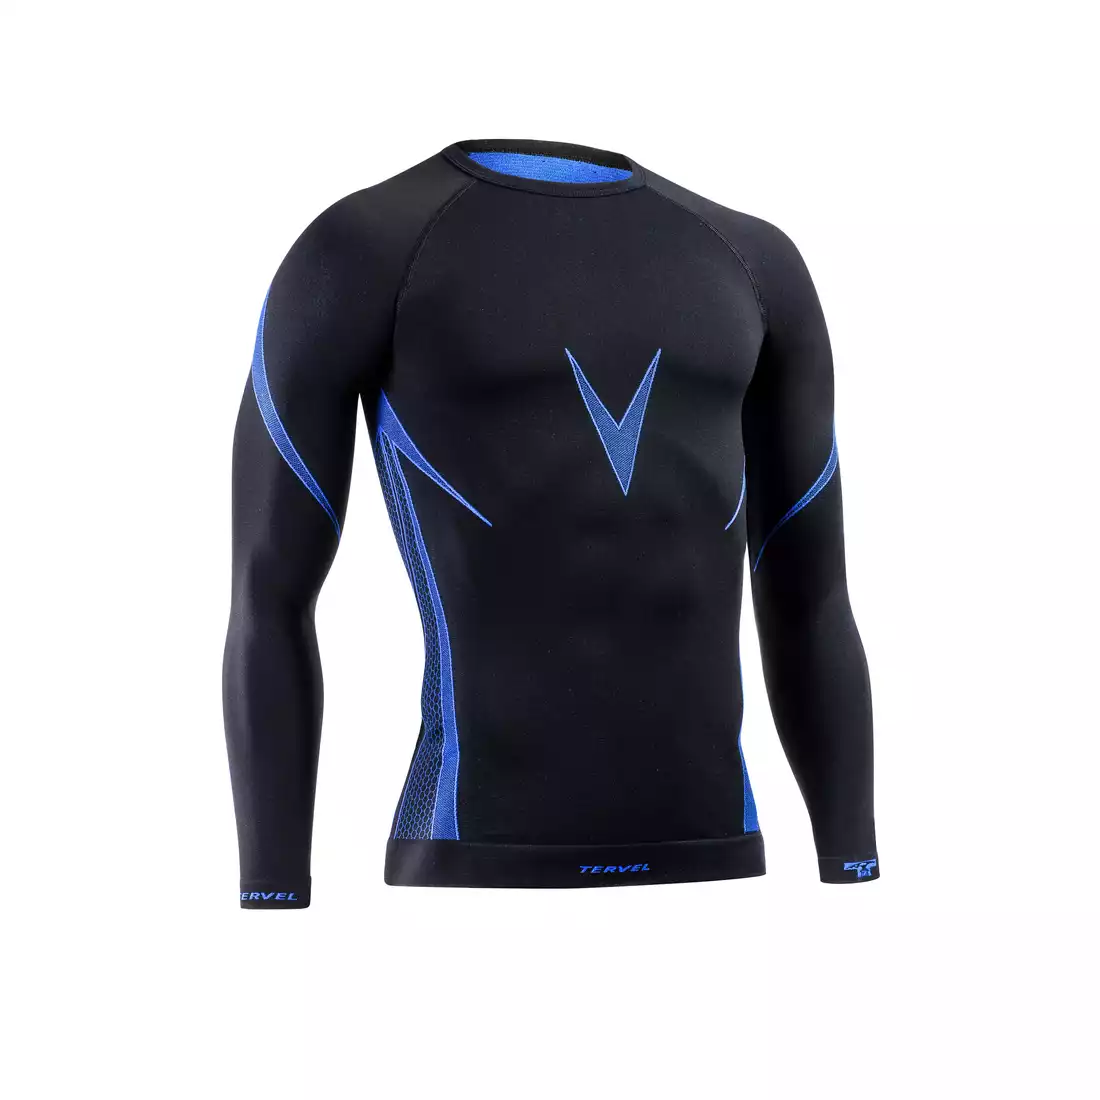 TERVEL - OPTILINE OPT1007 - koszulka męska termoaktywna D/R - czarno-niebieska